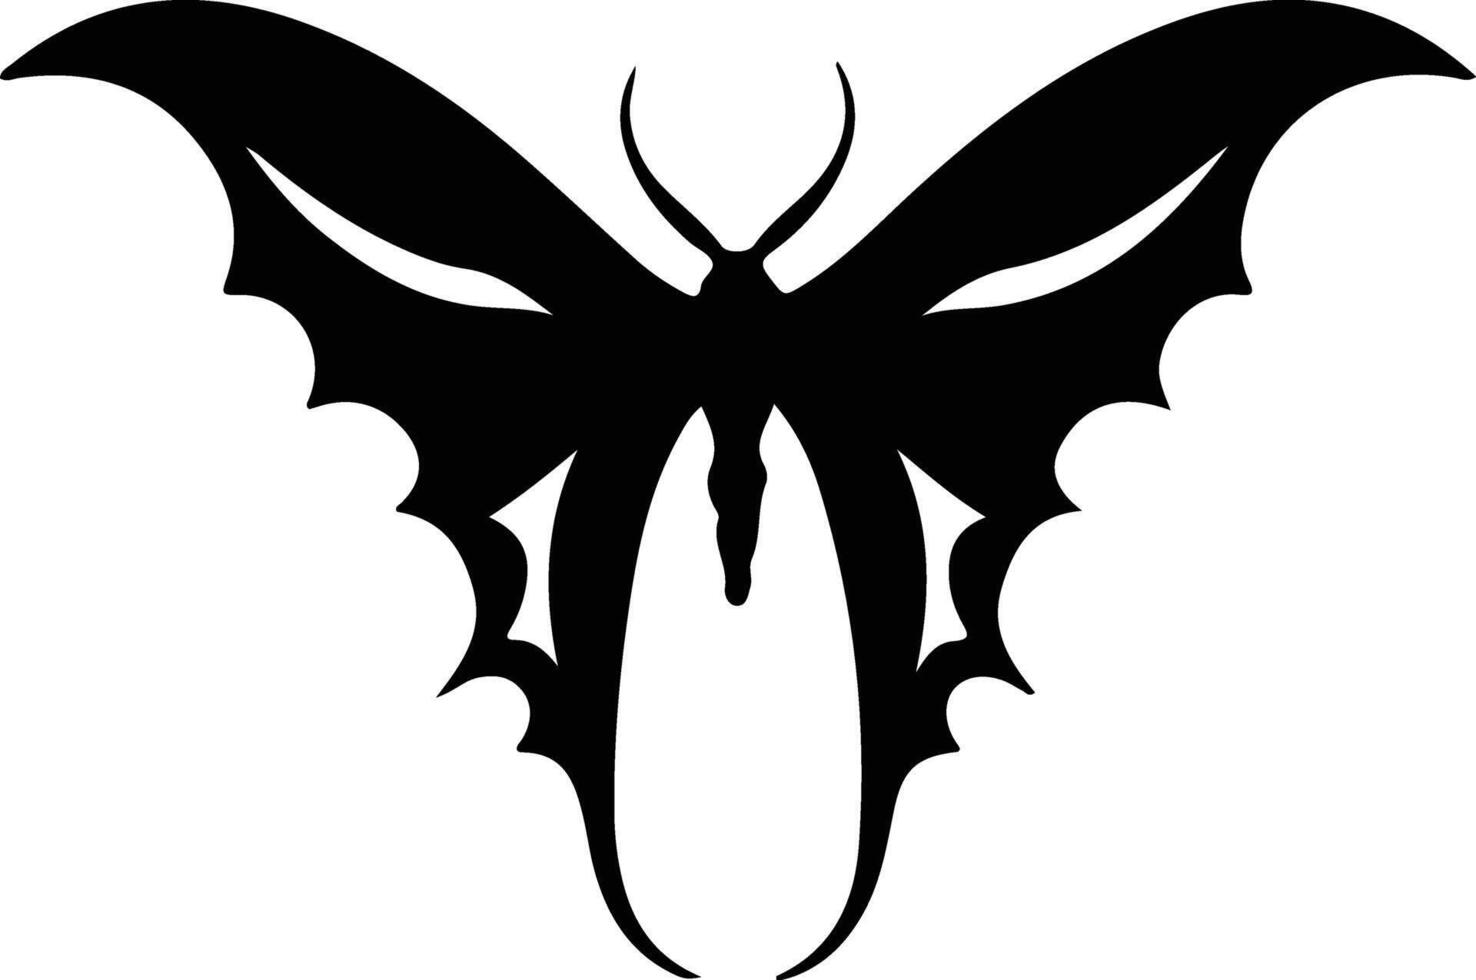 luna moth black silhouette vector